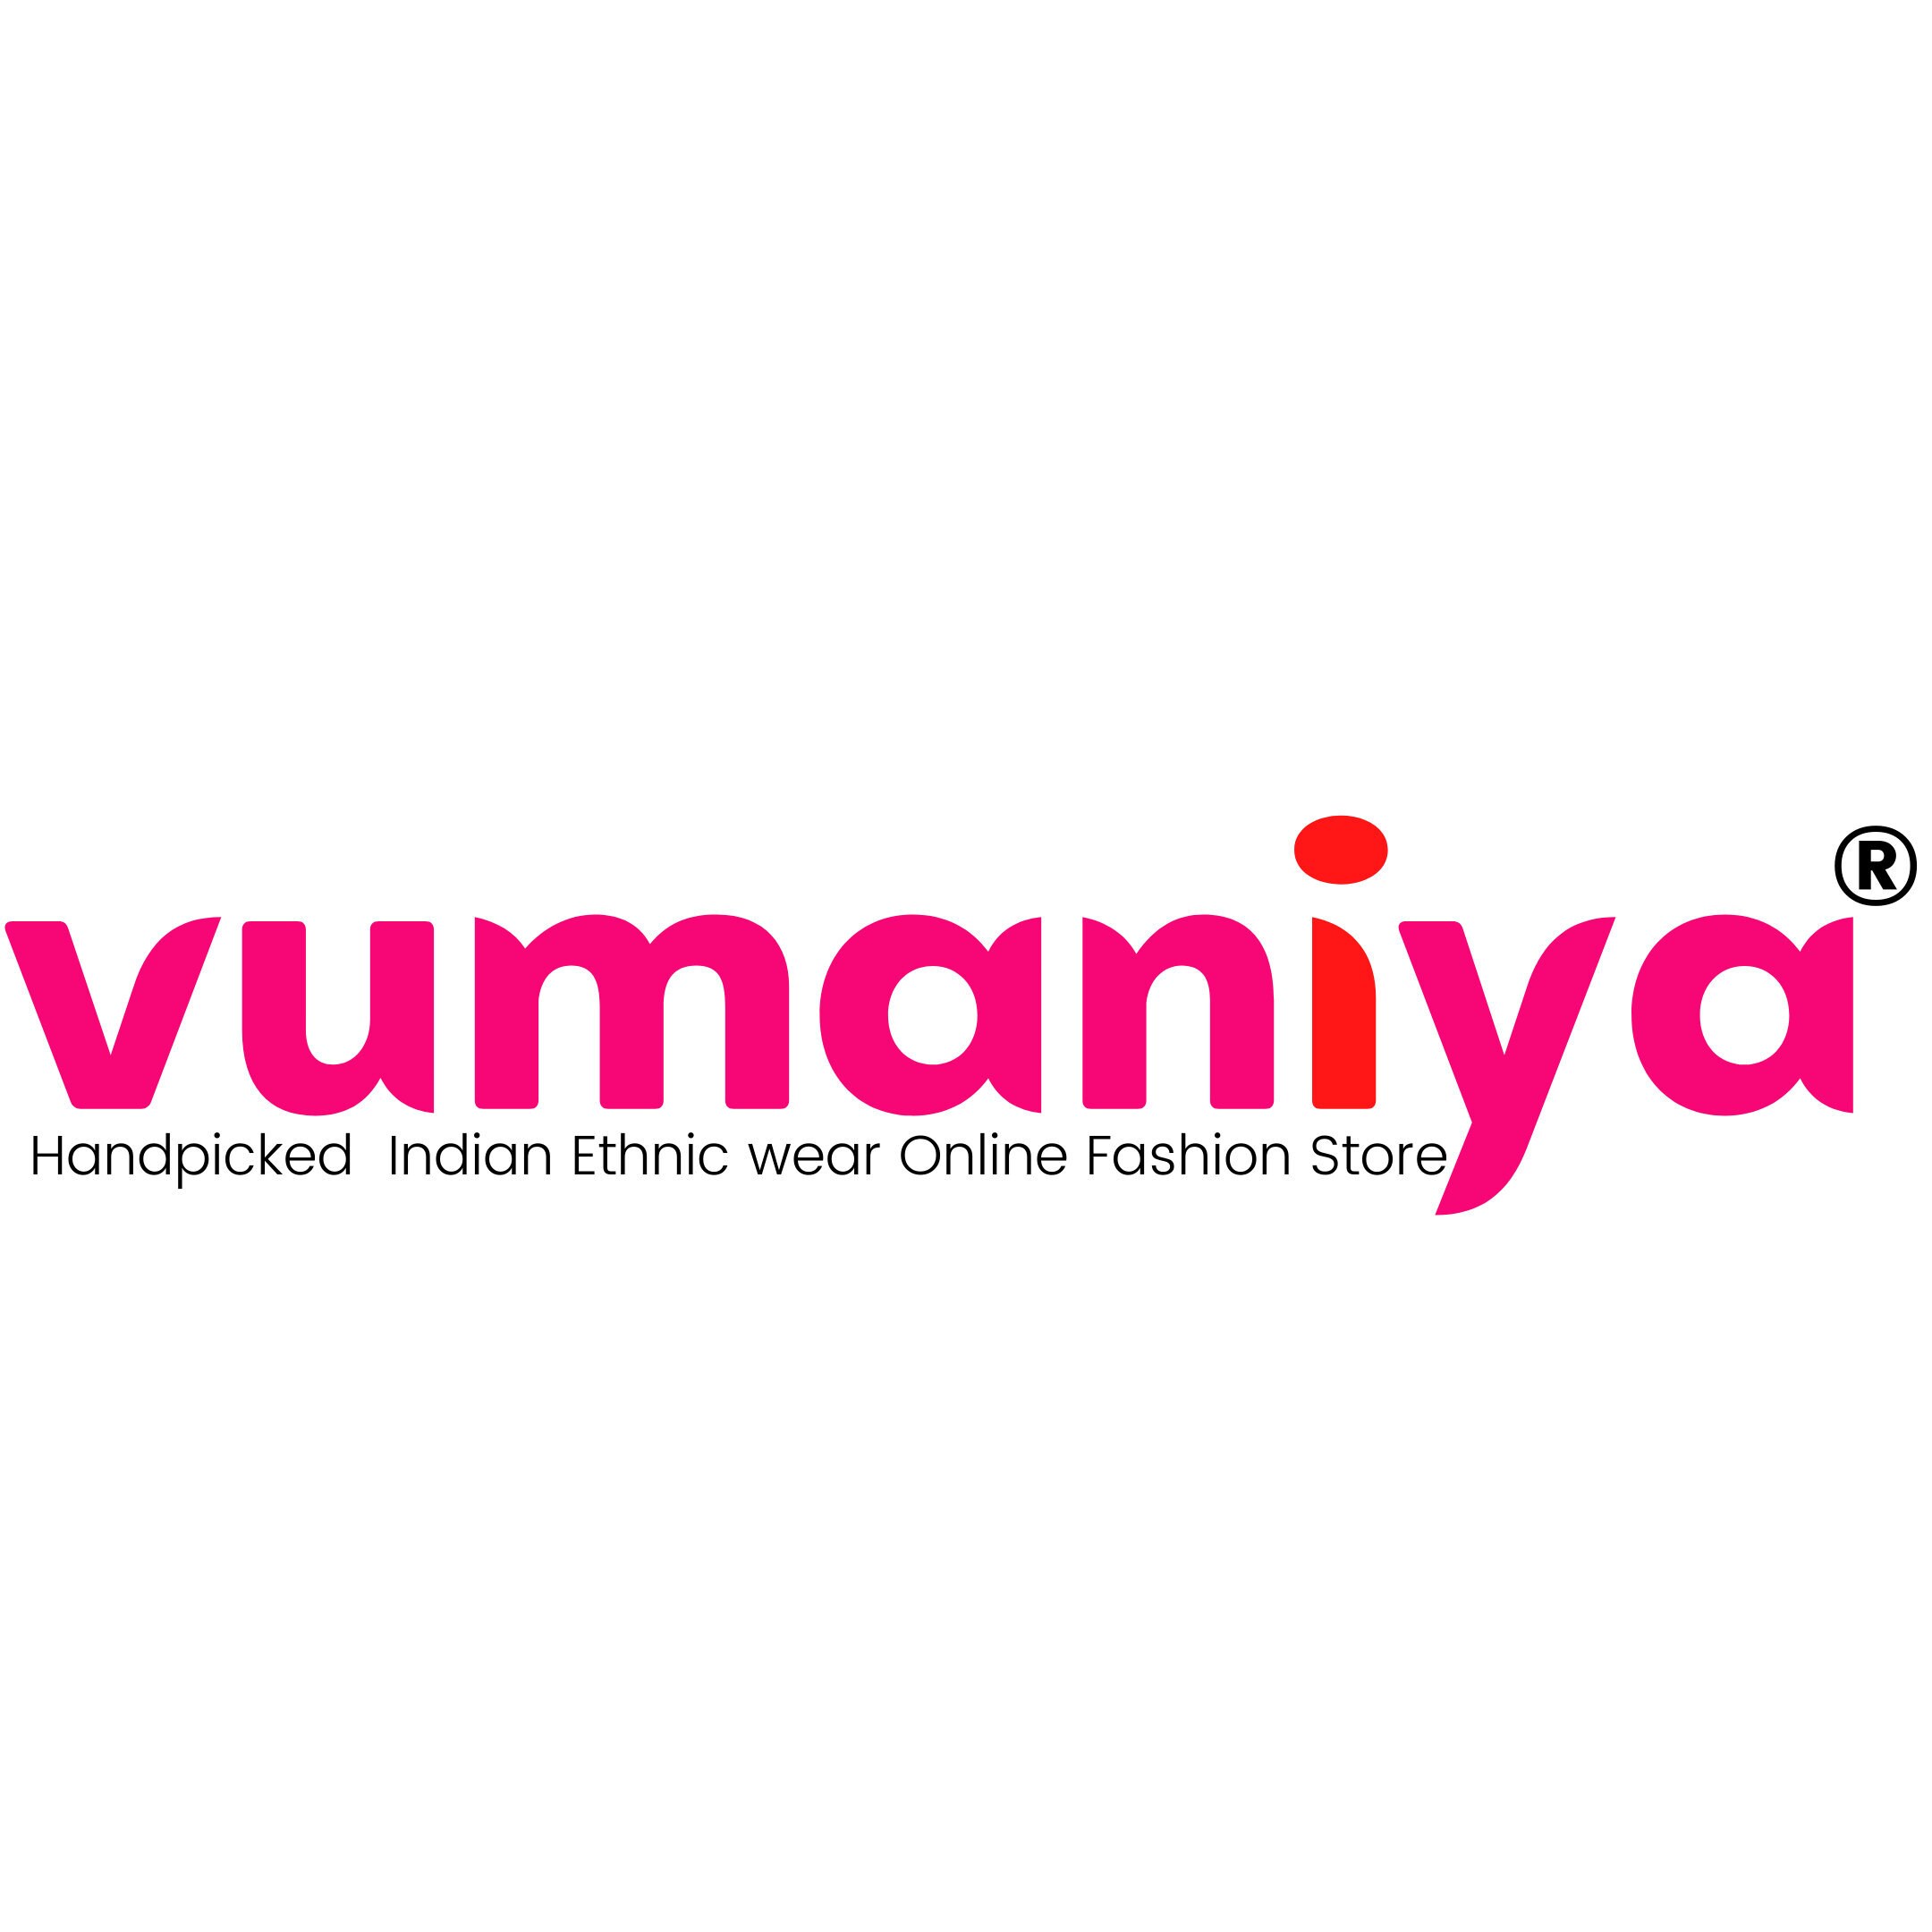 Handpicked Indian Ethnis wear Online Fashion Store by vumaniya